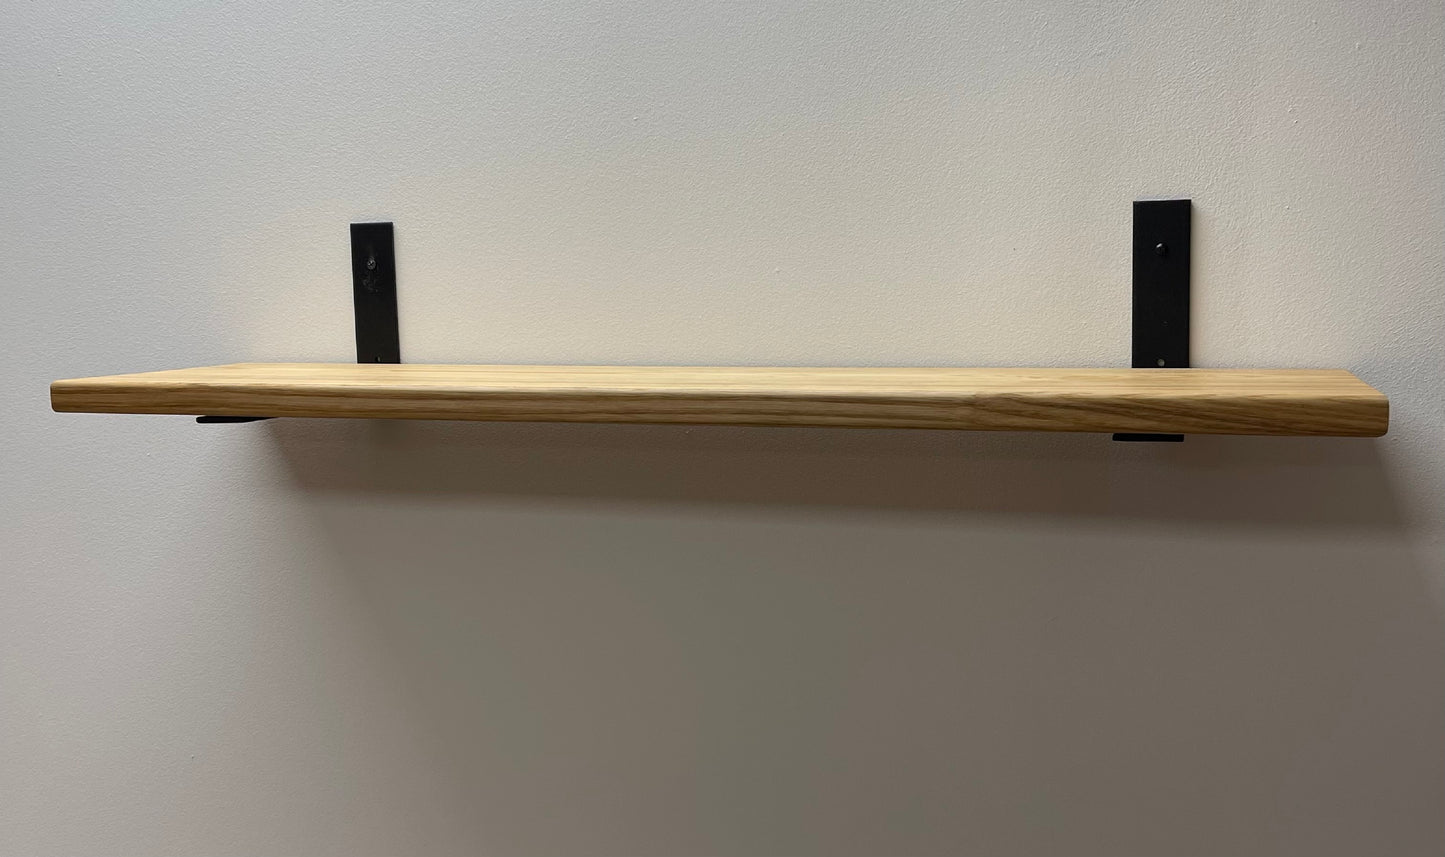 Premium American Ash Industrial Style Shelf with Flat Style Brackets, 20-25mm (1 Inch) Depth